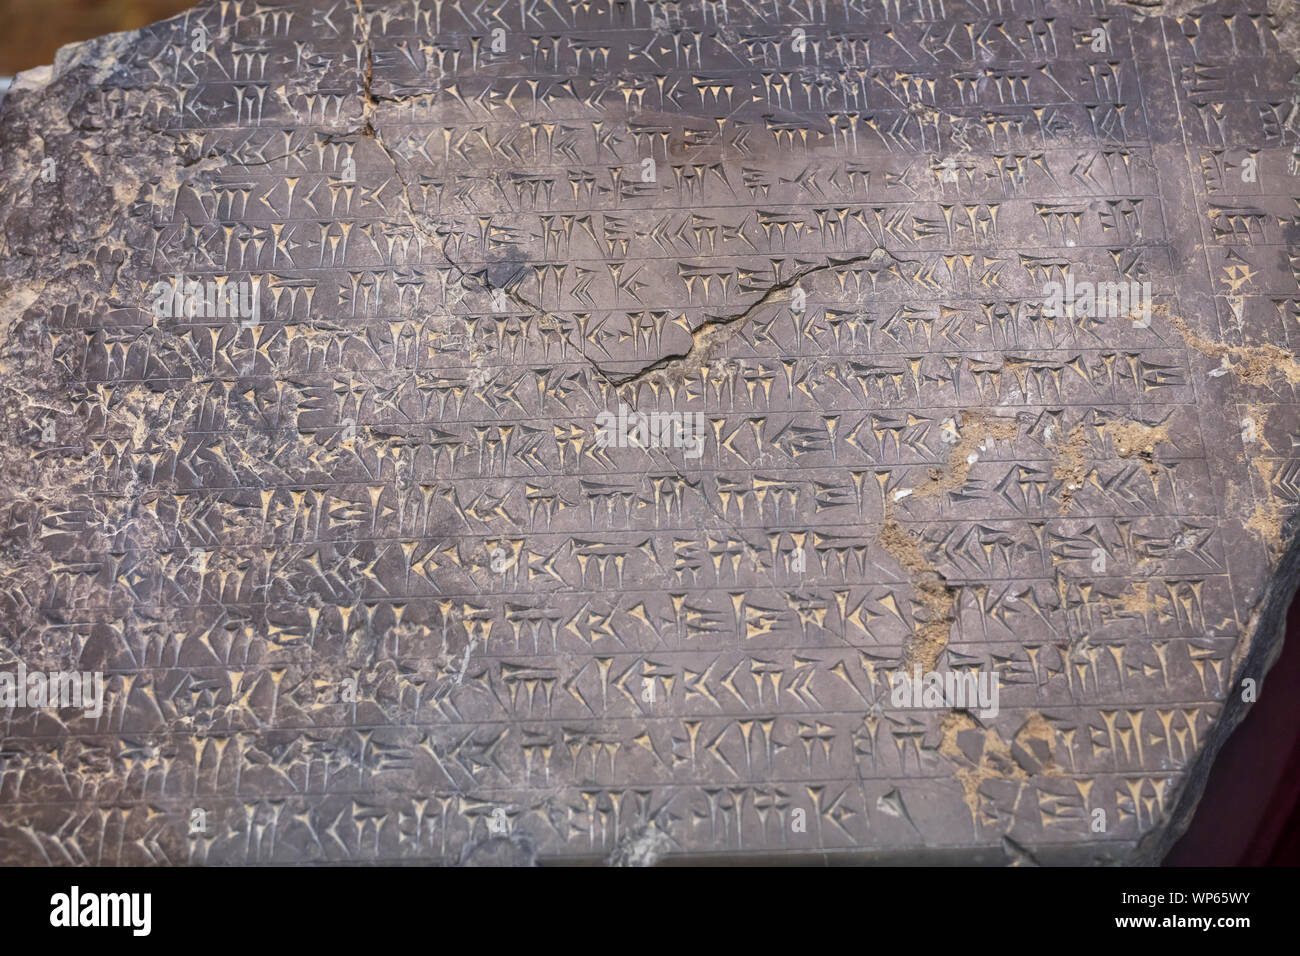 Xerxes inscription, Azerbaijan Museum, Tabriz, East Azerbaijan province, Iran Stock Photo